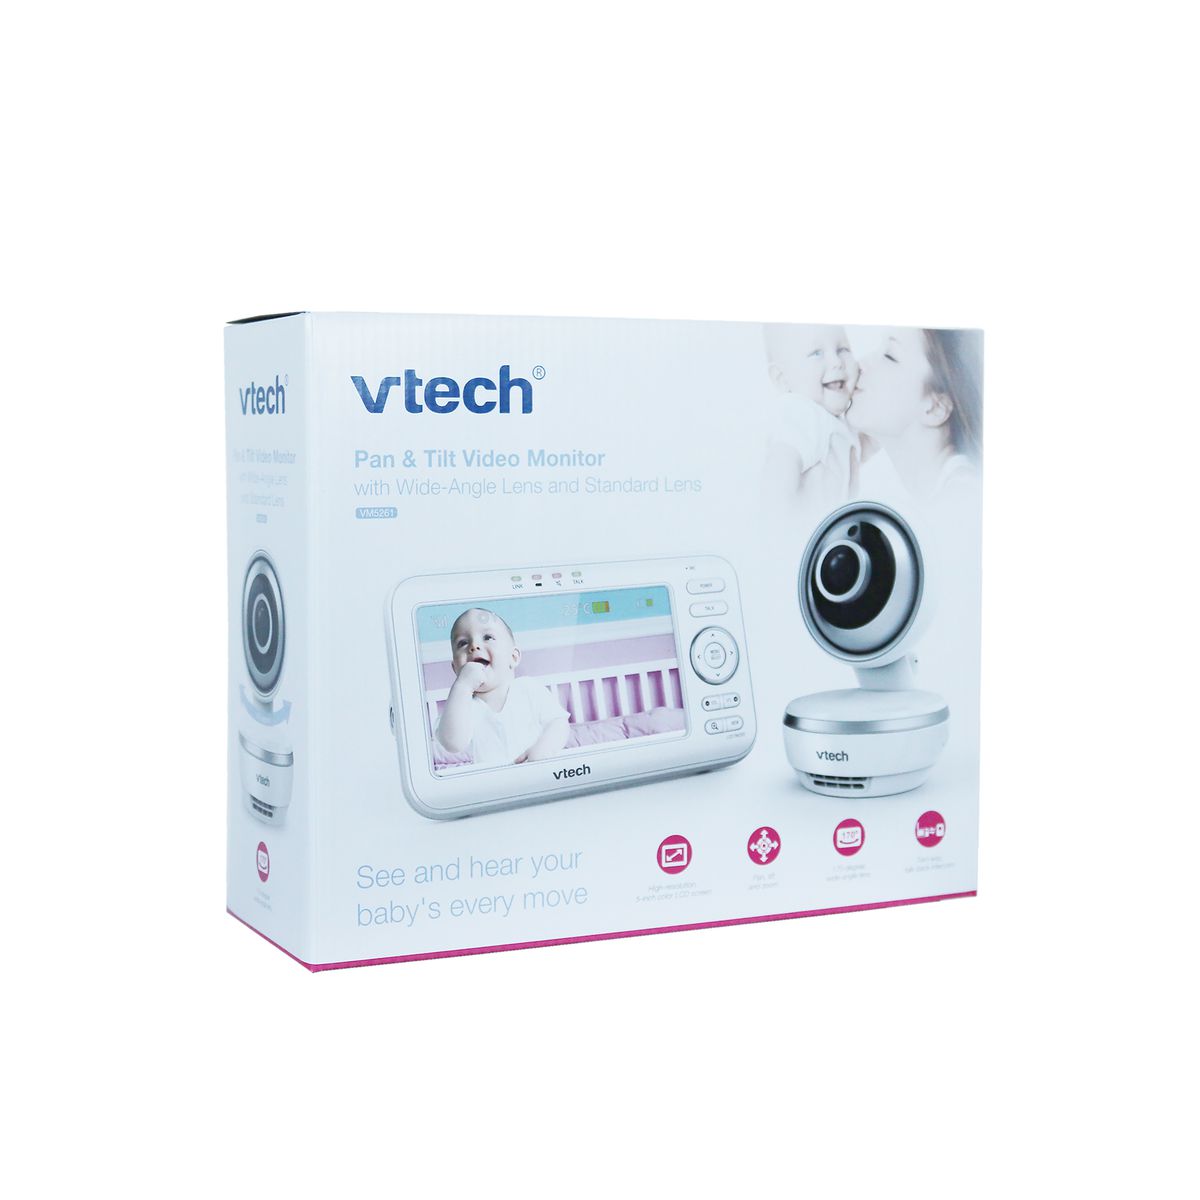 Vtech VM5261 Pan & Tilt Video Monitor